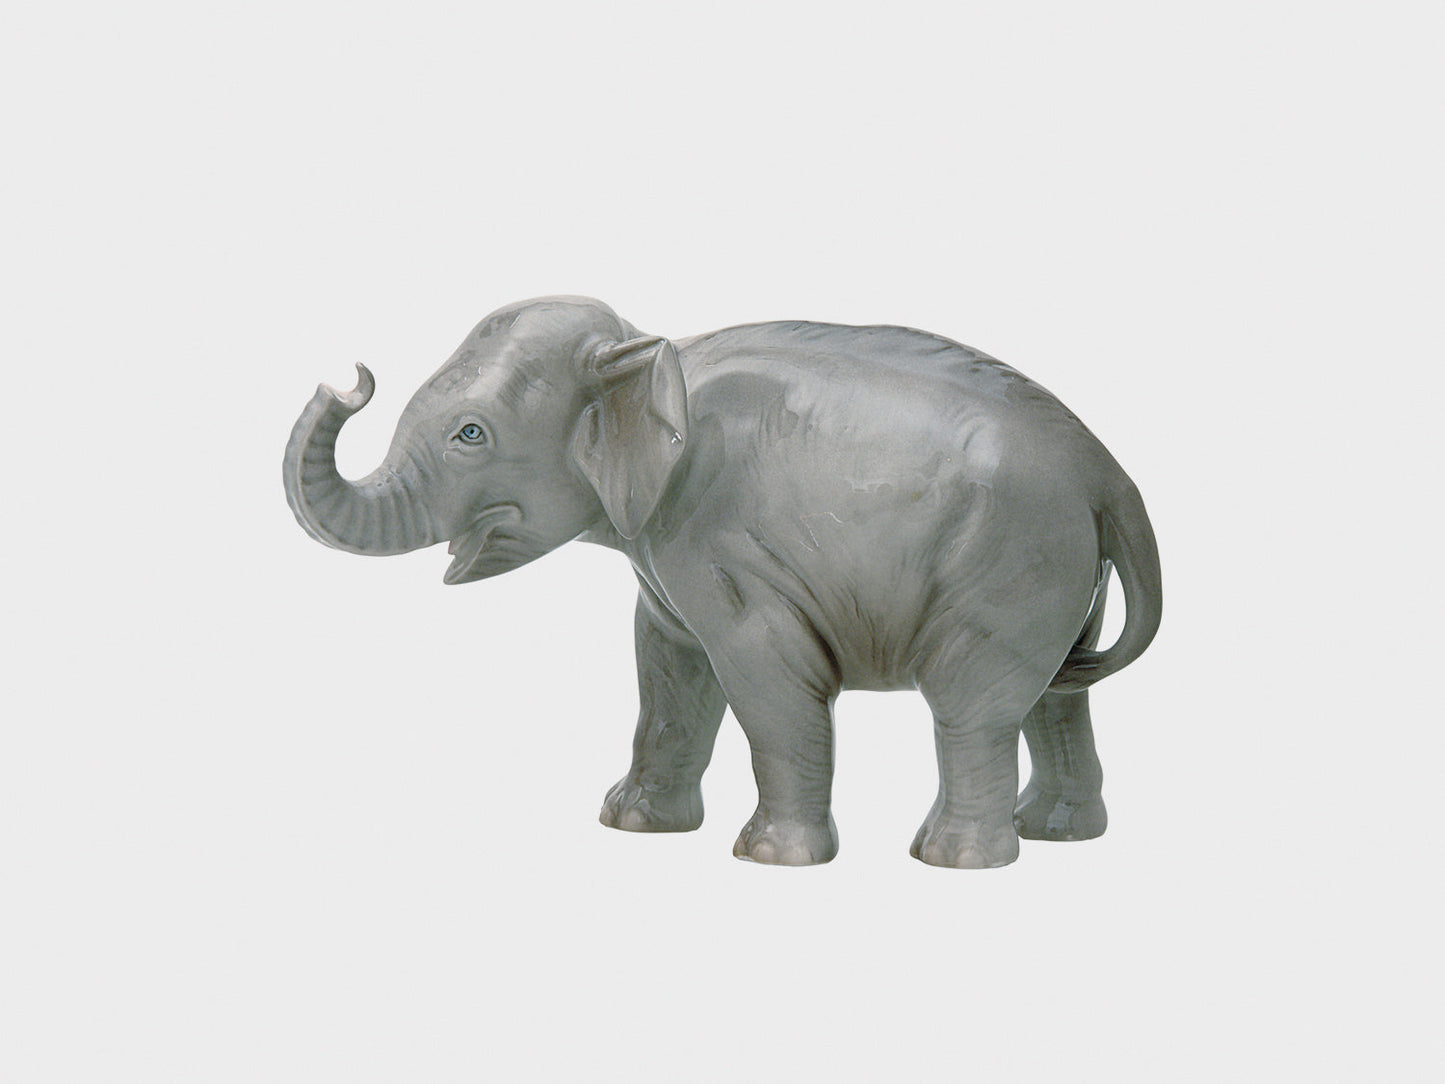 Elephant trunk up